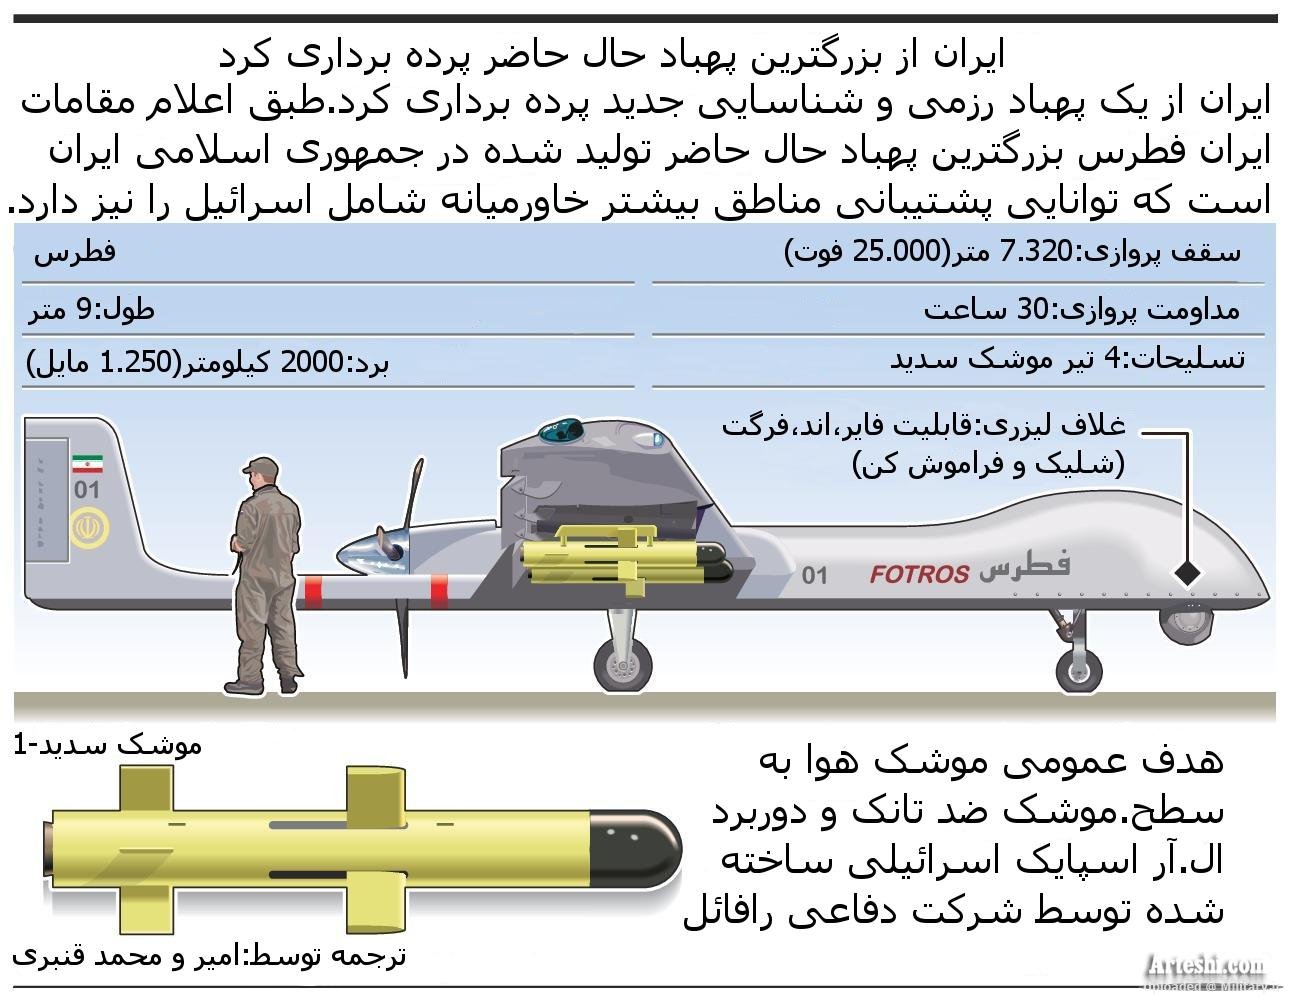 iran-drone_-_Copy.jpg